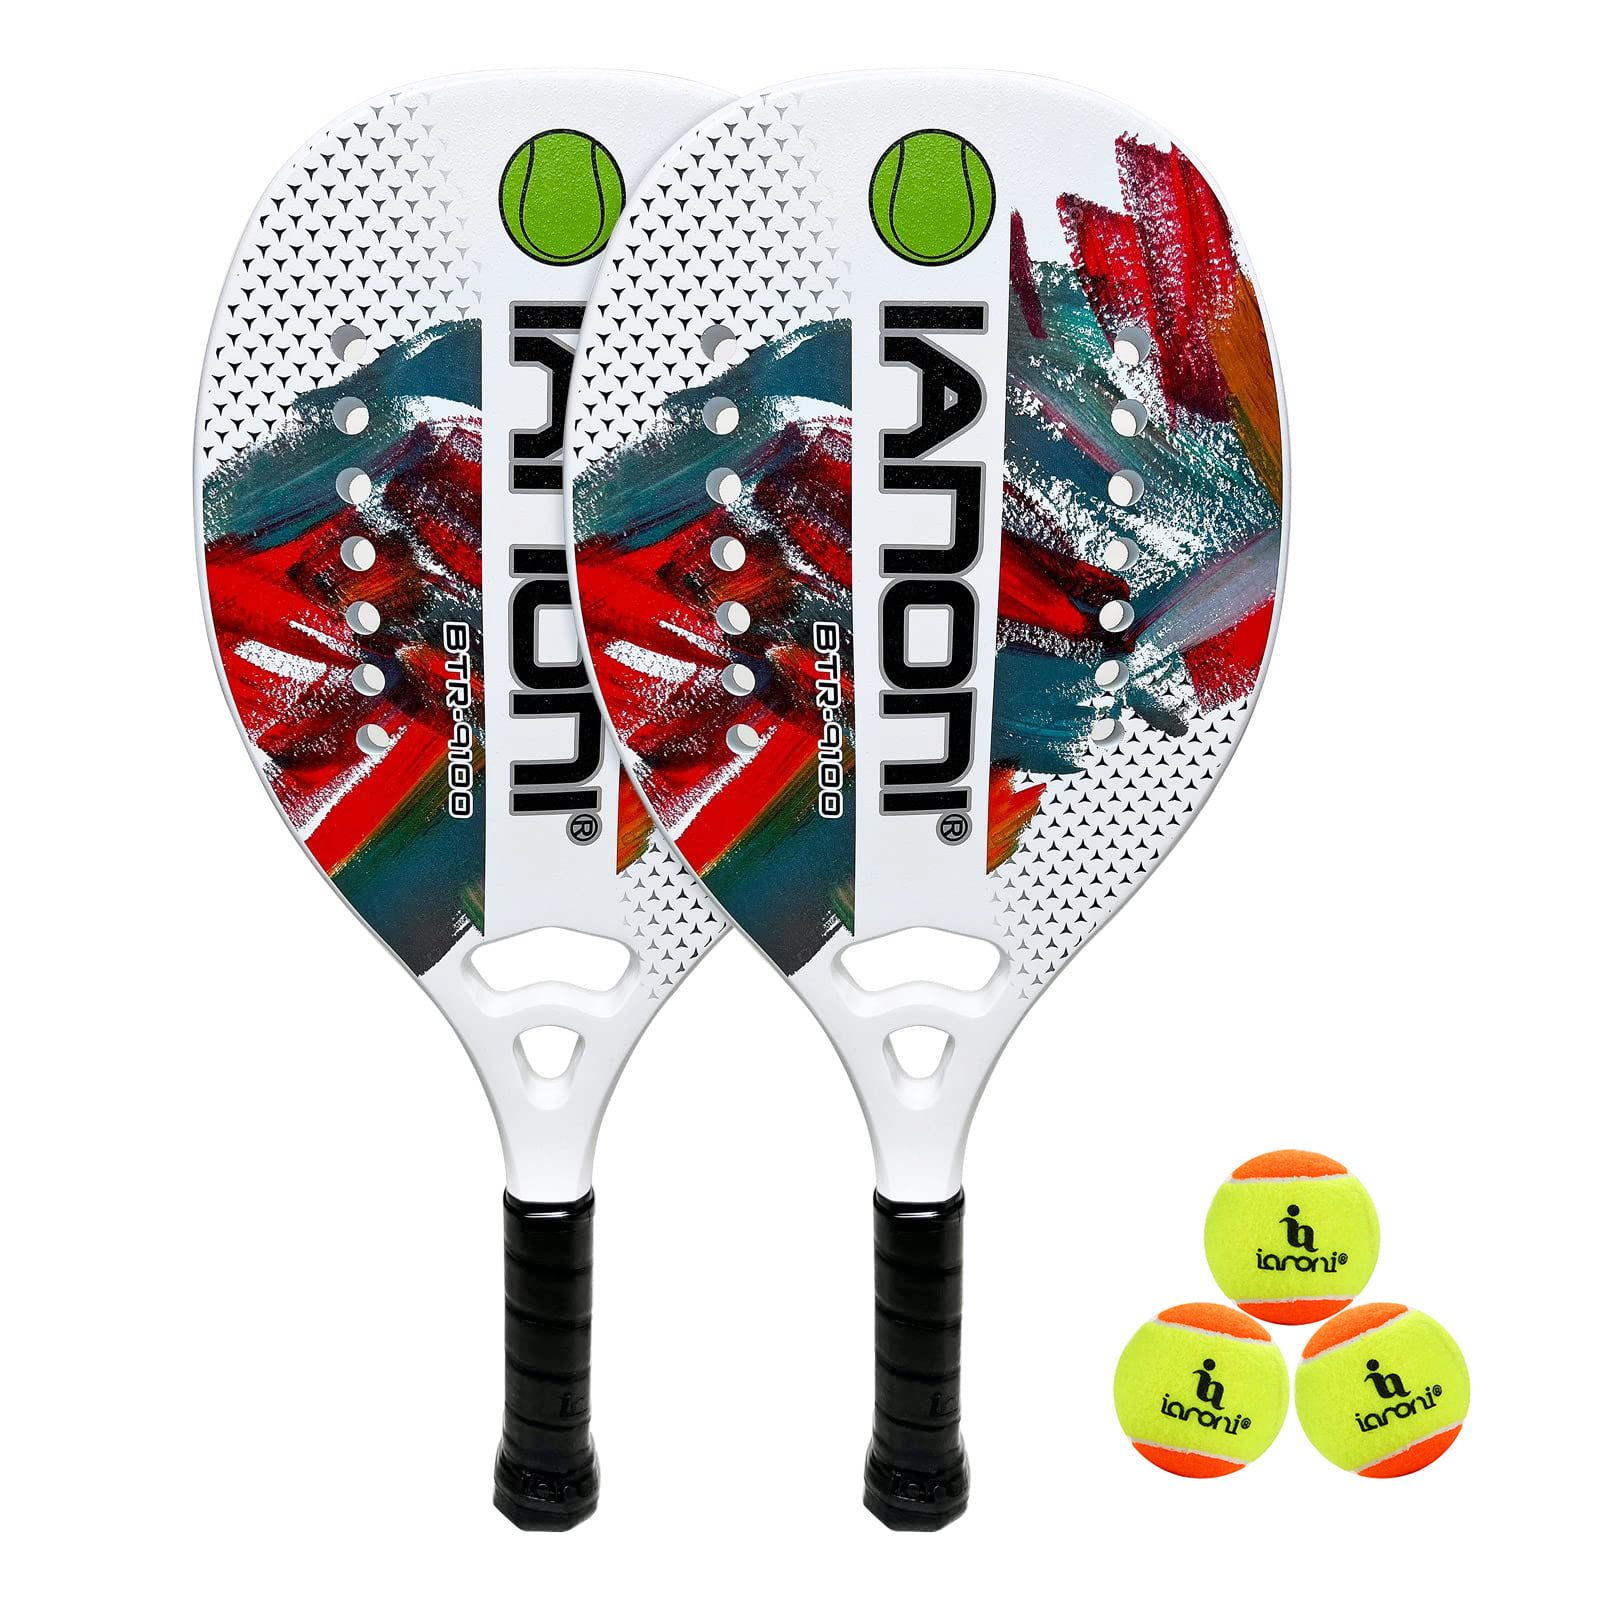 Beach Tennis Racquet With Carrying Bag Carbon Fiber 3k Racket